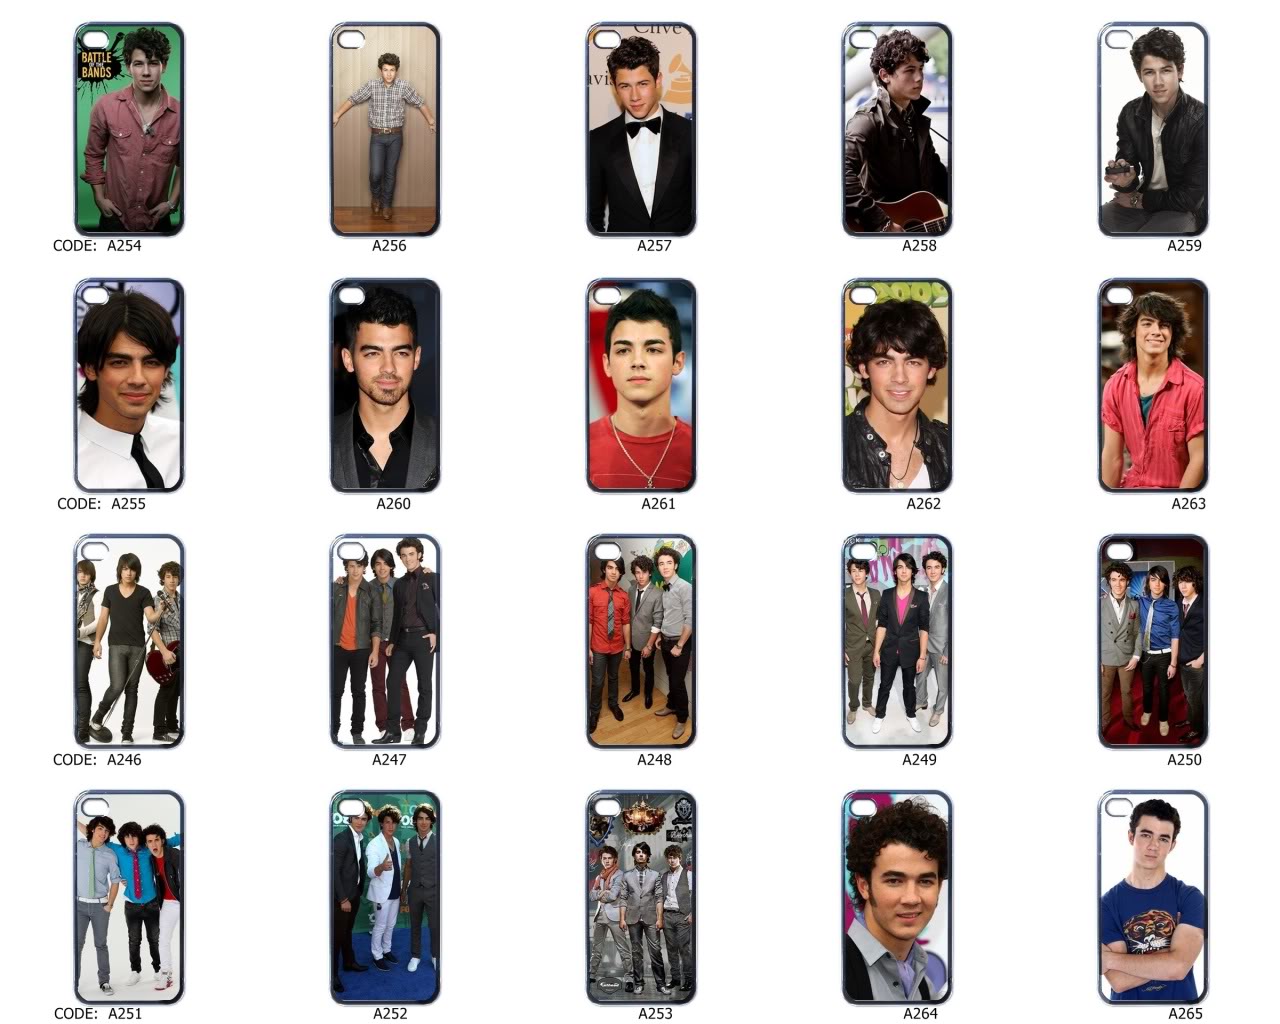 Joe Kevin Nick Jonas Brothers iPhone Case Photo